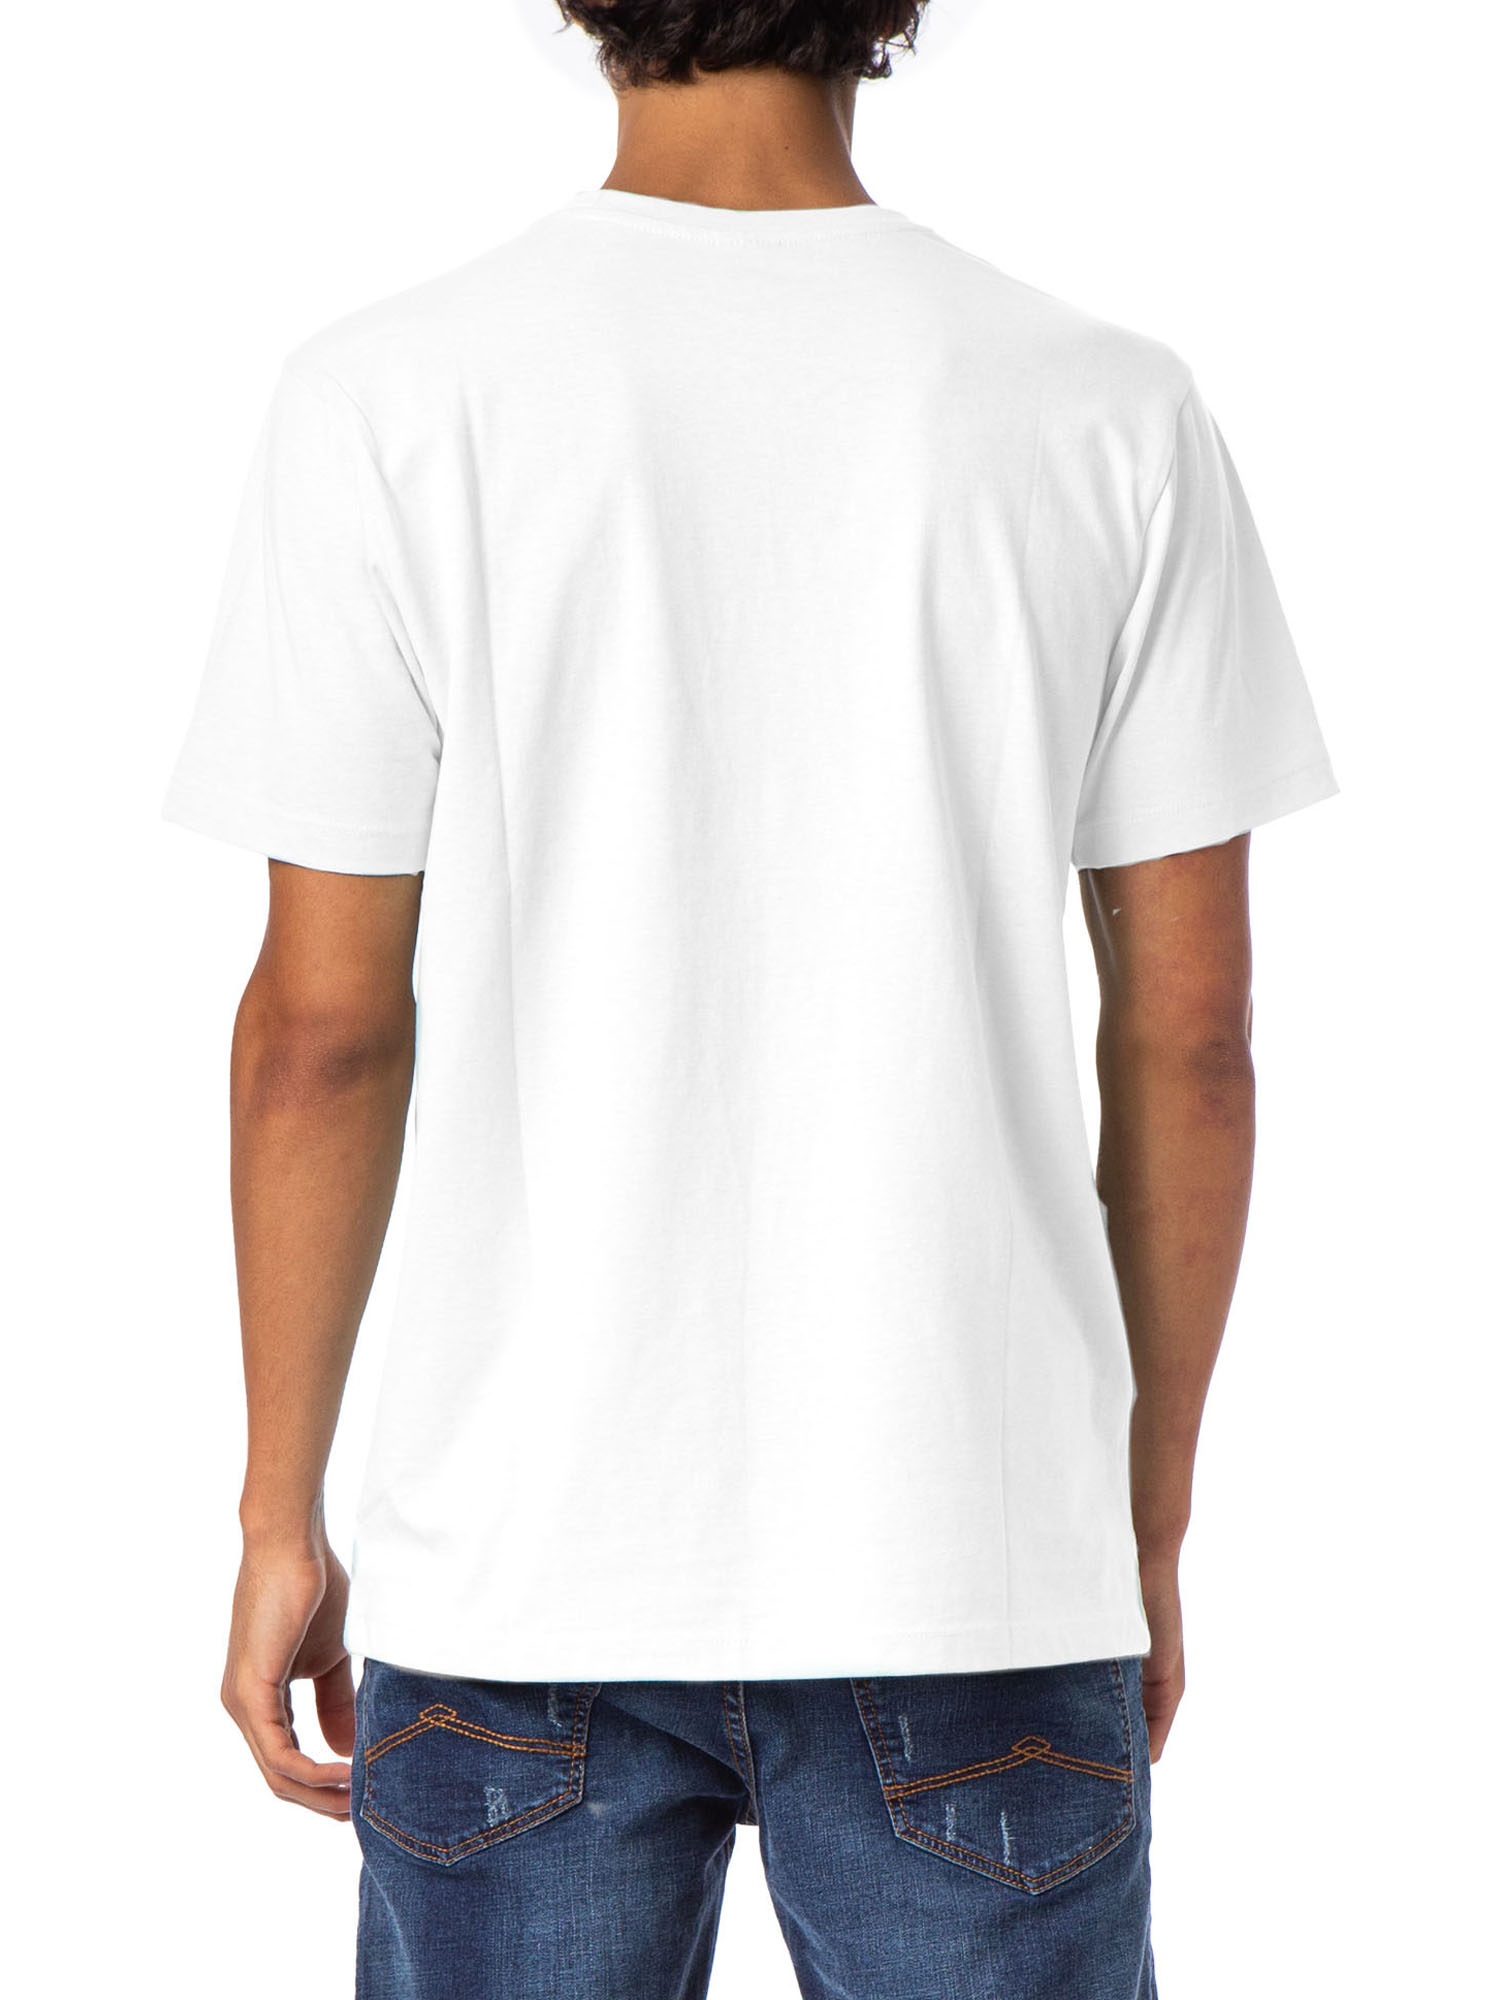 U.S. Polo Assn. Men's Crew Neck Pocket T-Shirt - image 2 of 2